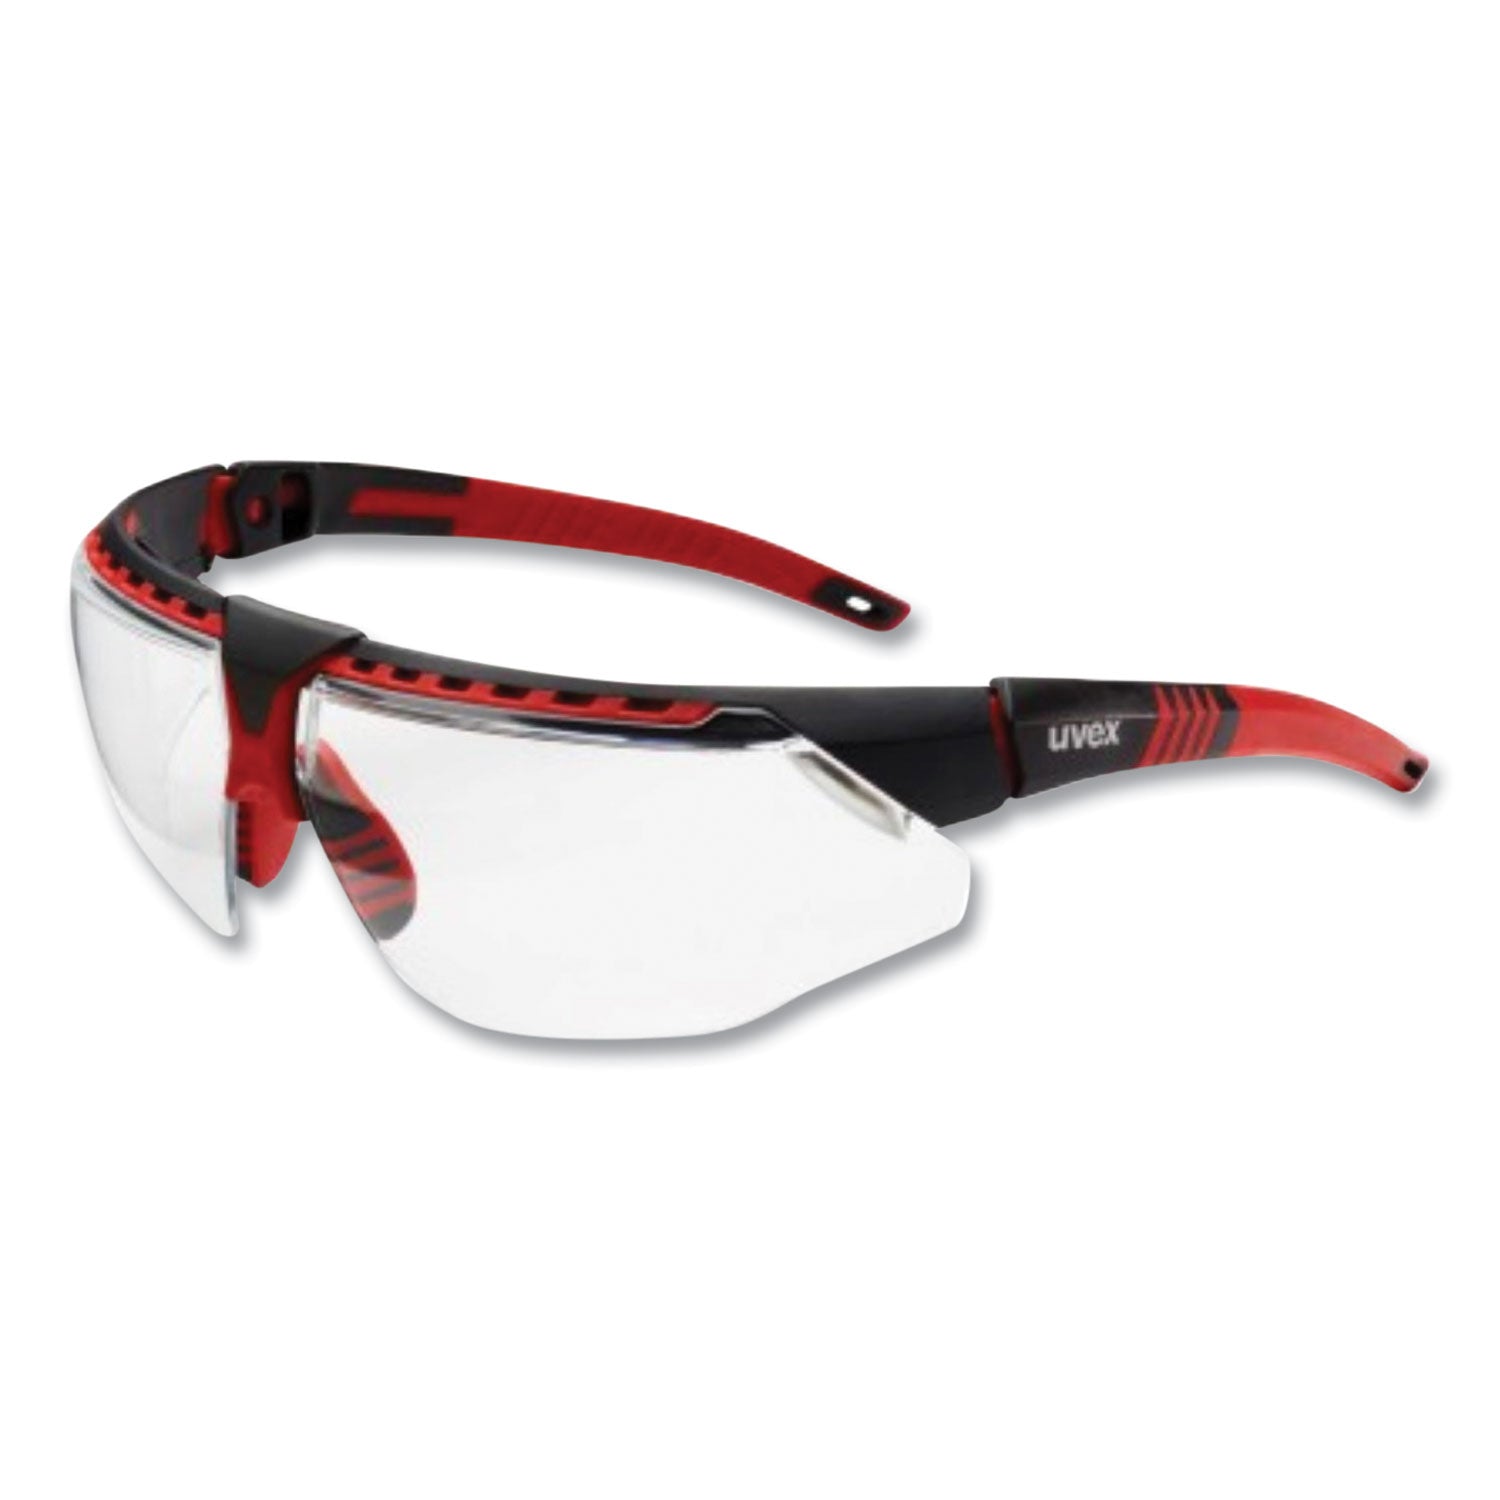 avatar-safety-glasses-red-black-polycarbonate-frame-clear-polycarbonate-lens_uvxs2860hs - 1